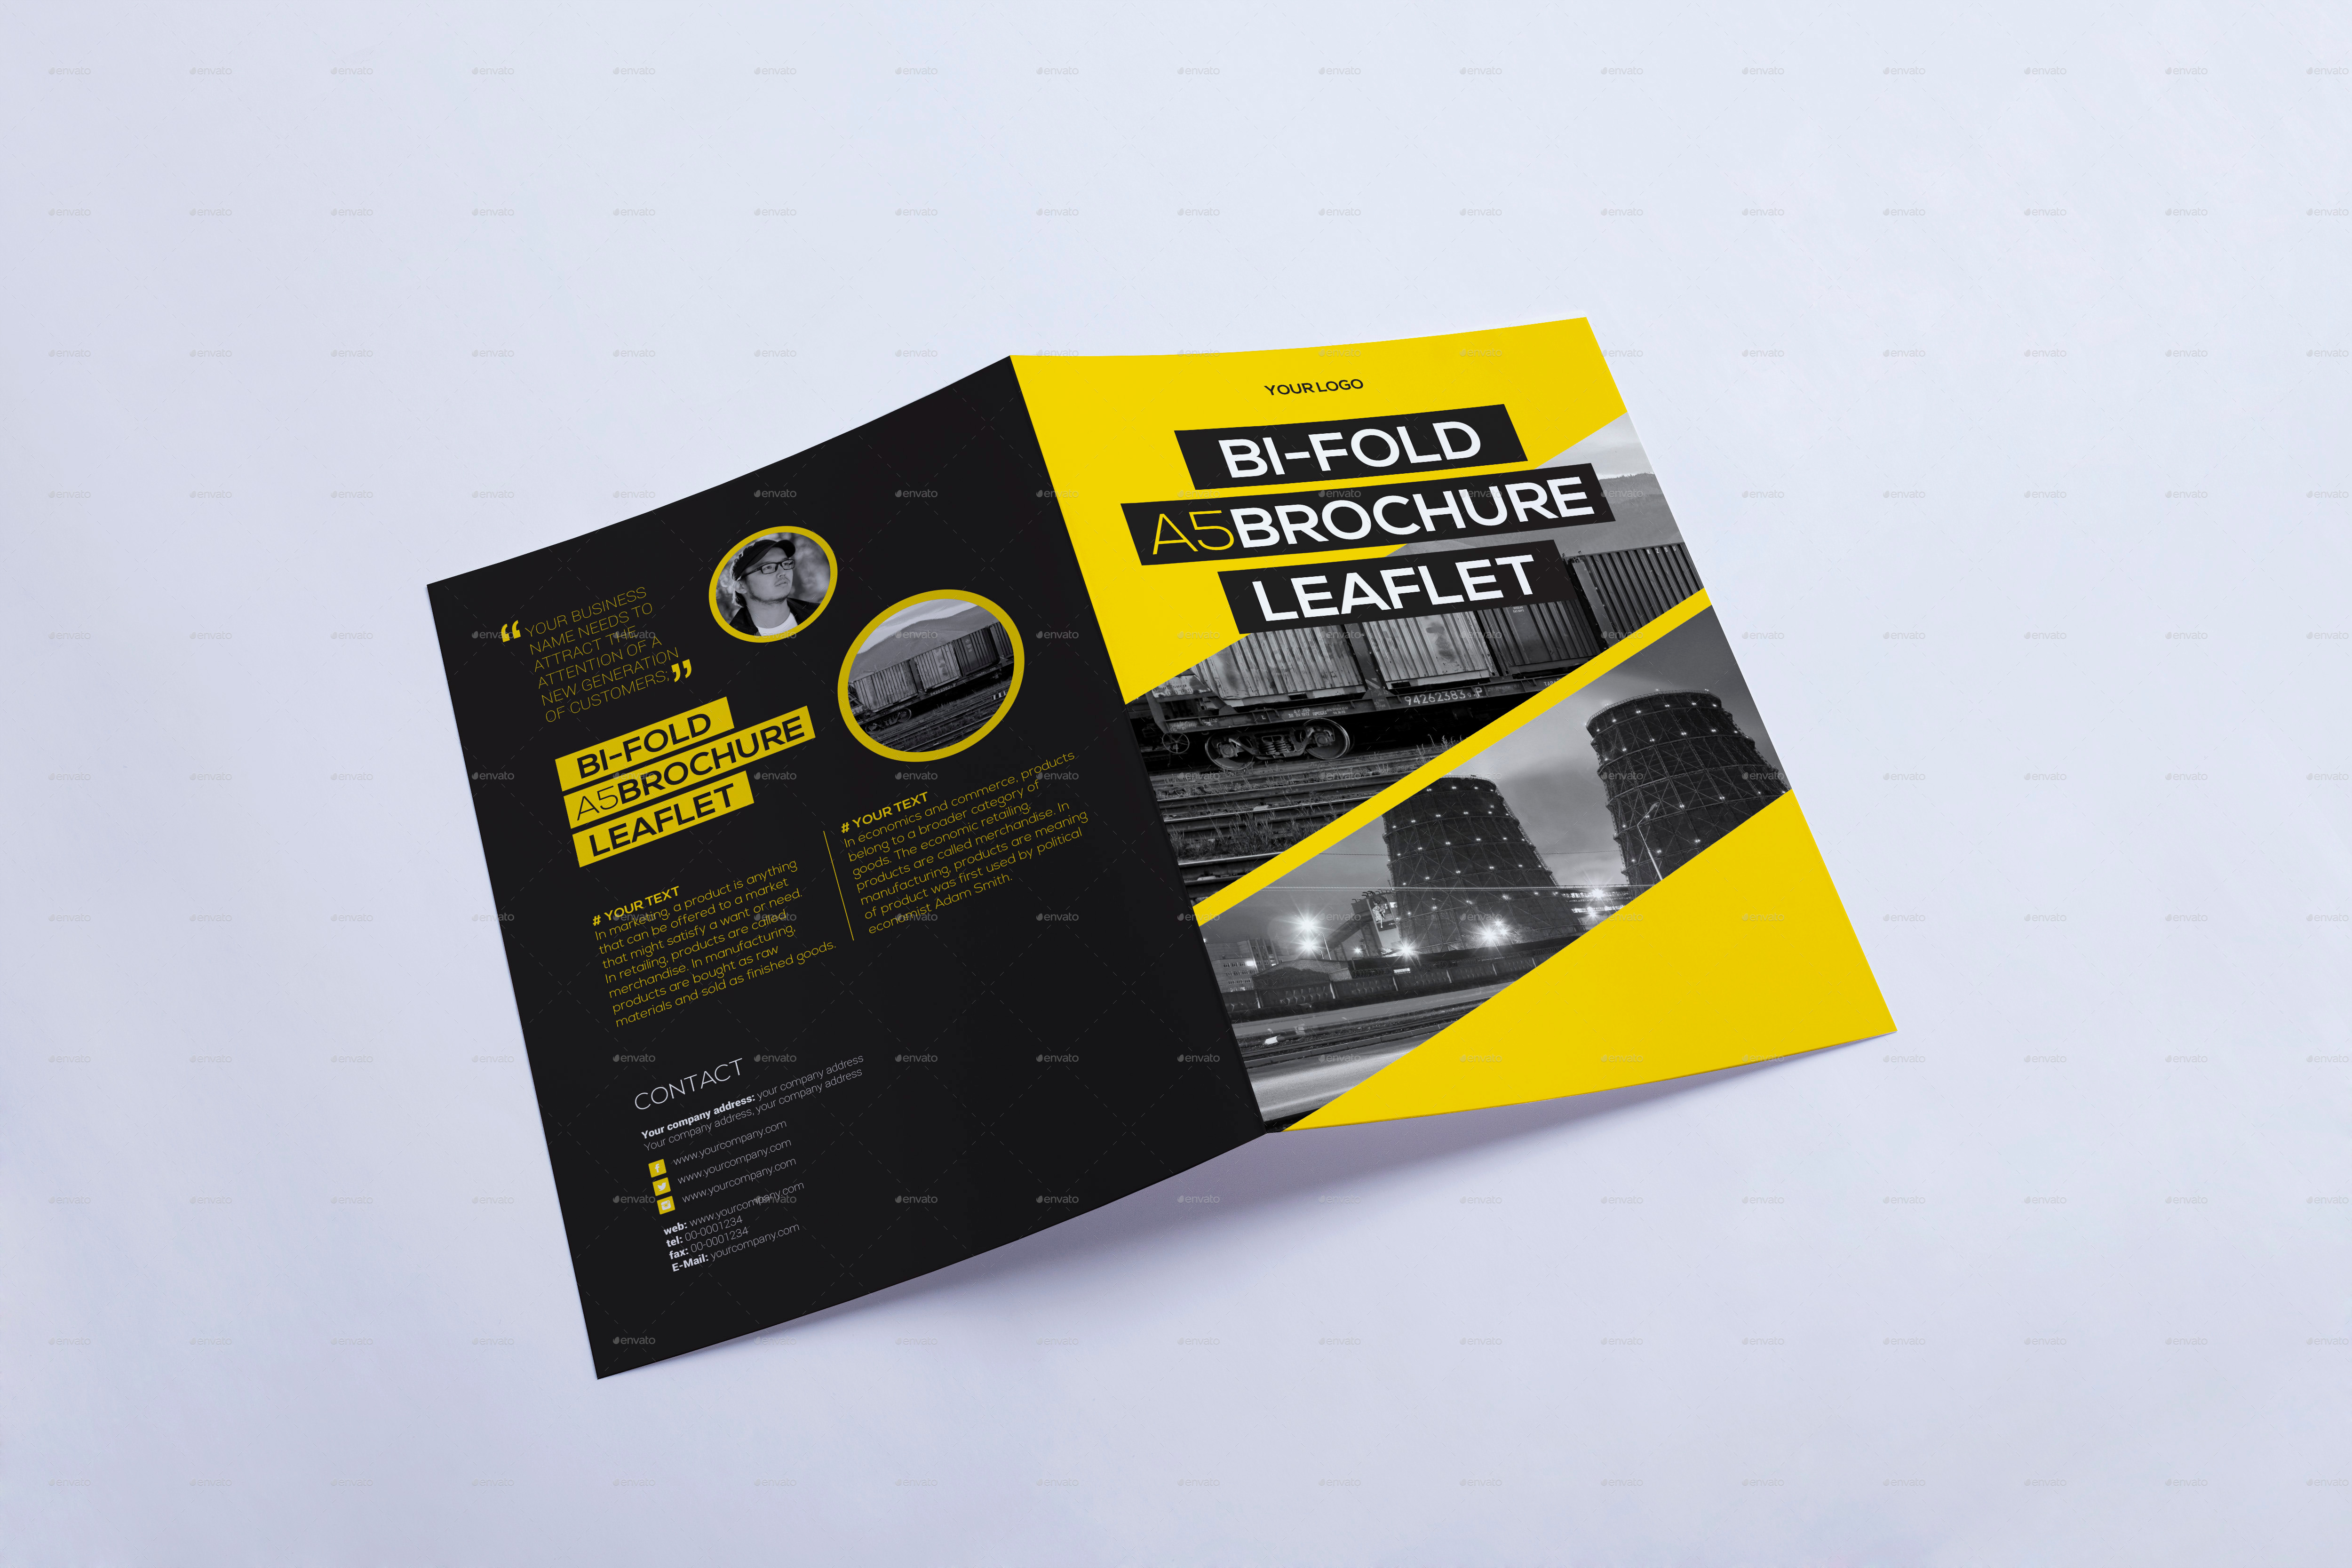 Bi-Fold A5 Brochure - Leaflet by Xepeec  GraphicRiver